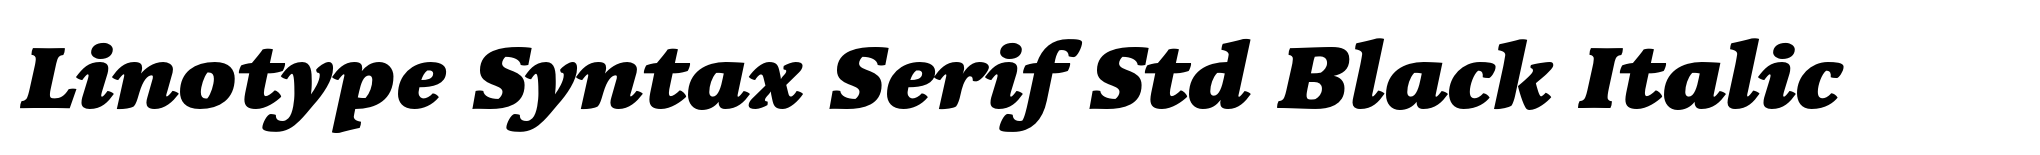 Linotype Syntax Serif Std Black Italic image